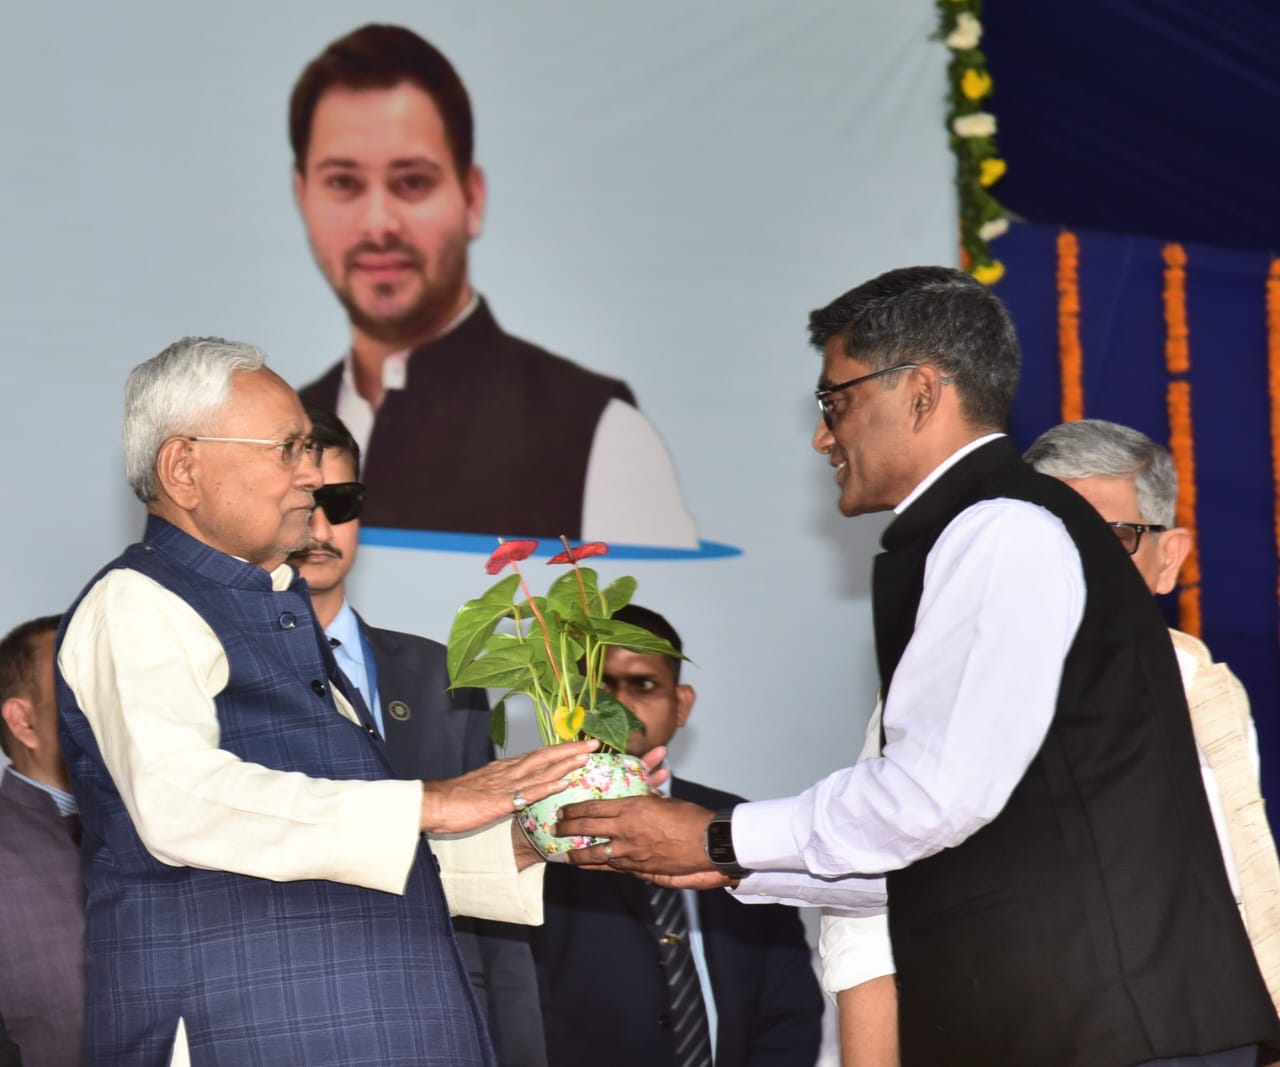 Bihar Chief Minister Nitish Kumar Advocates Special State Status